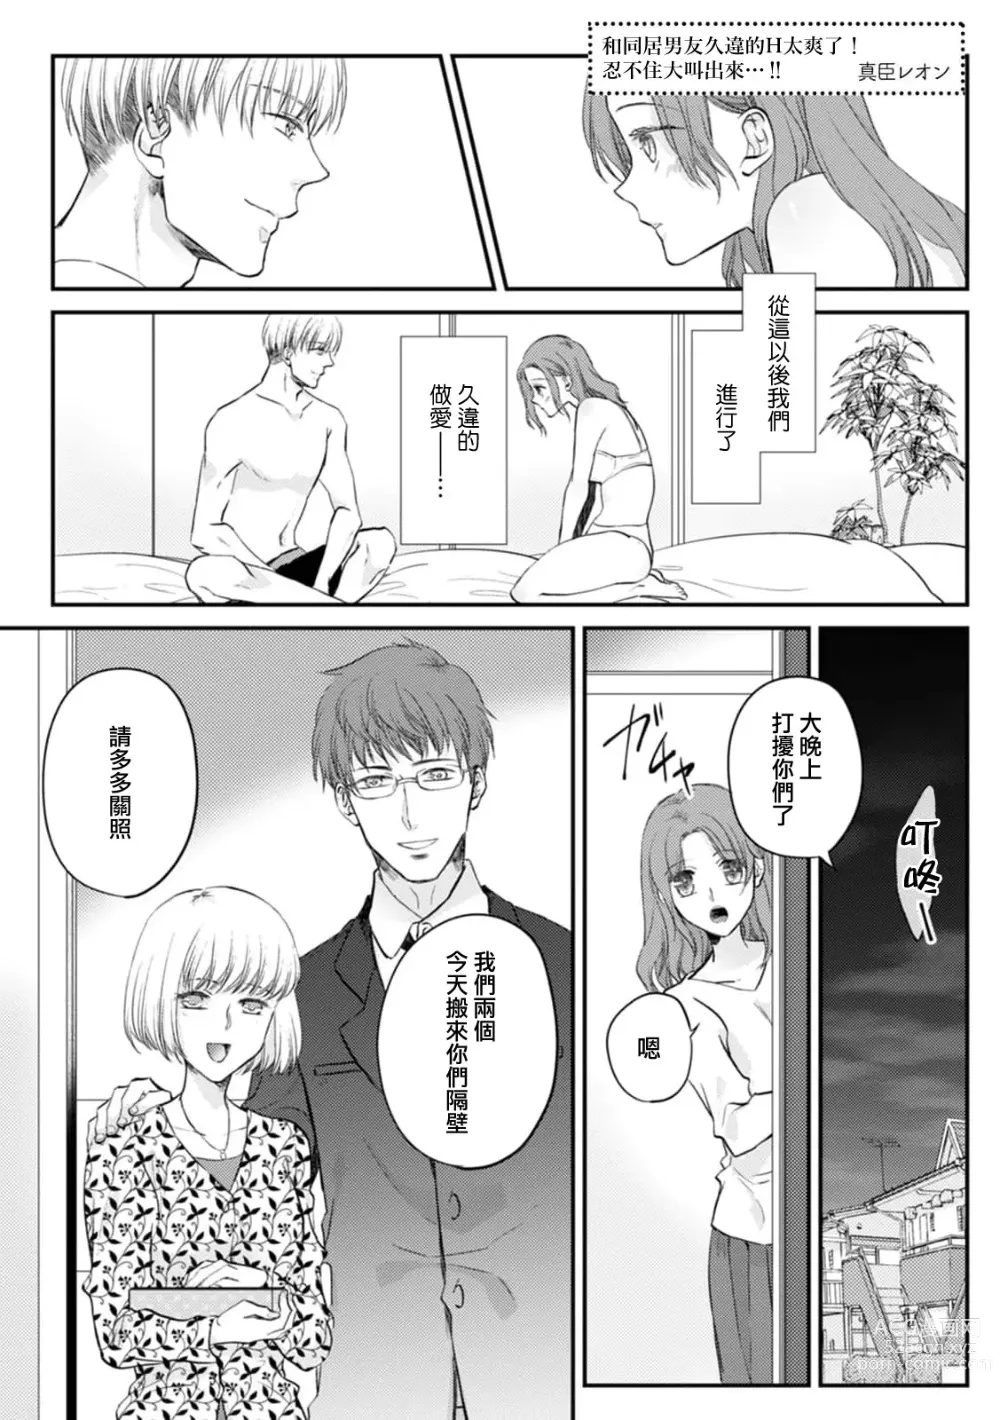 Page 2 of manga 和同居男友久违的H太爽了!忍不住大叫出来…!!